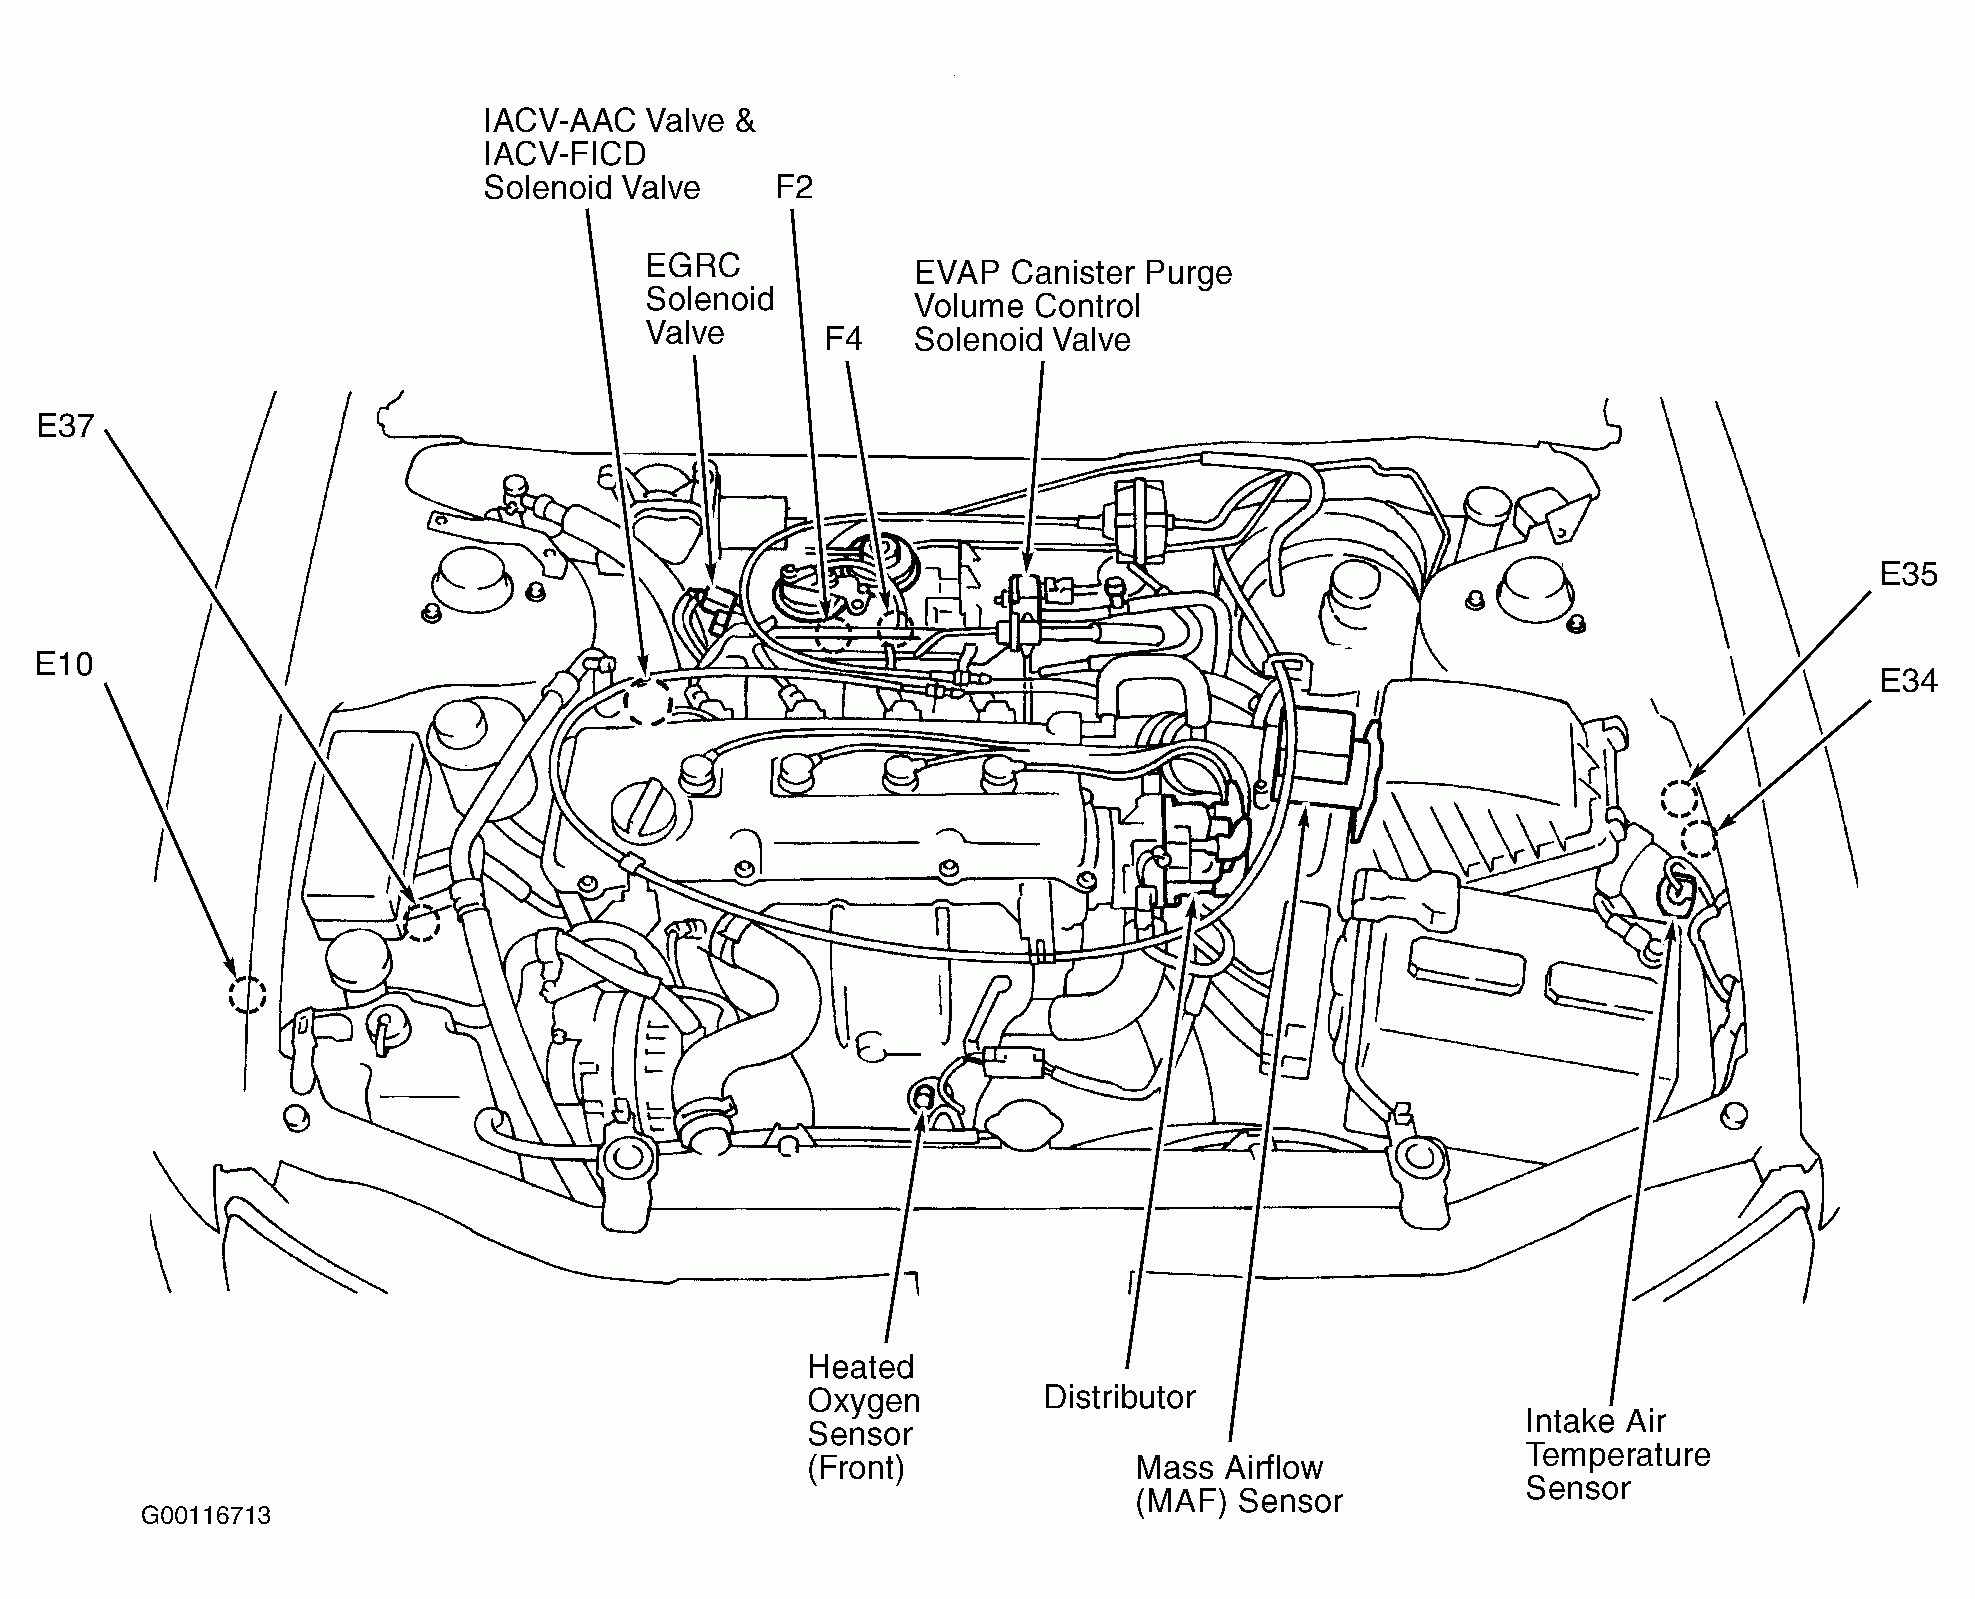 1993 Nissan Sentra Engine Diagram 1995 Nissan Altima Engine Diagram Wiring Diagram Paper Of 1993 Nissan Sentra Engine Diagram